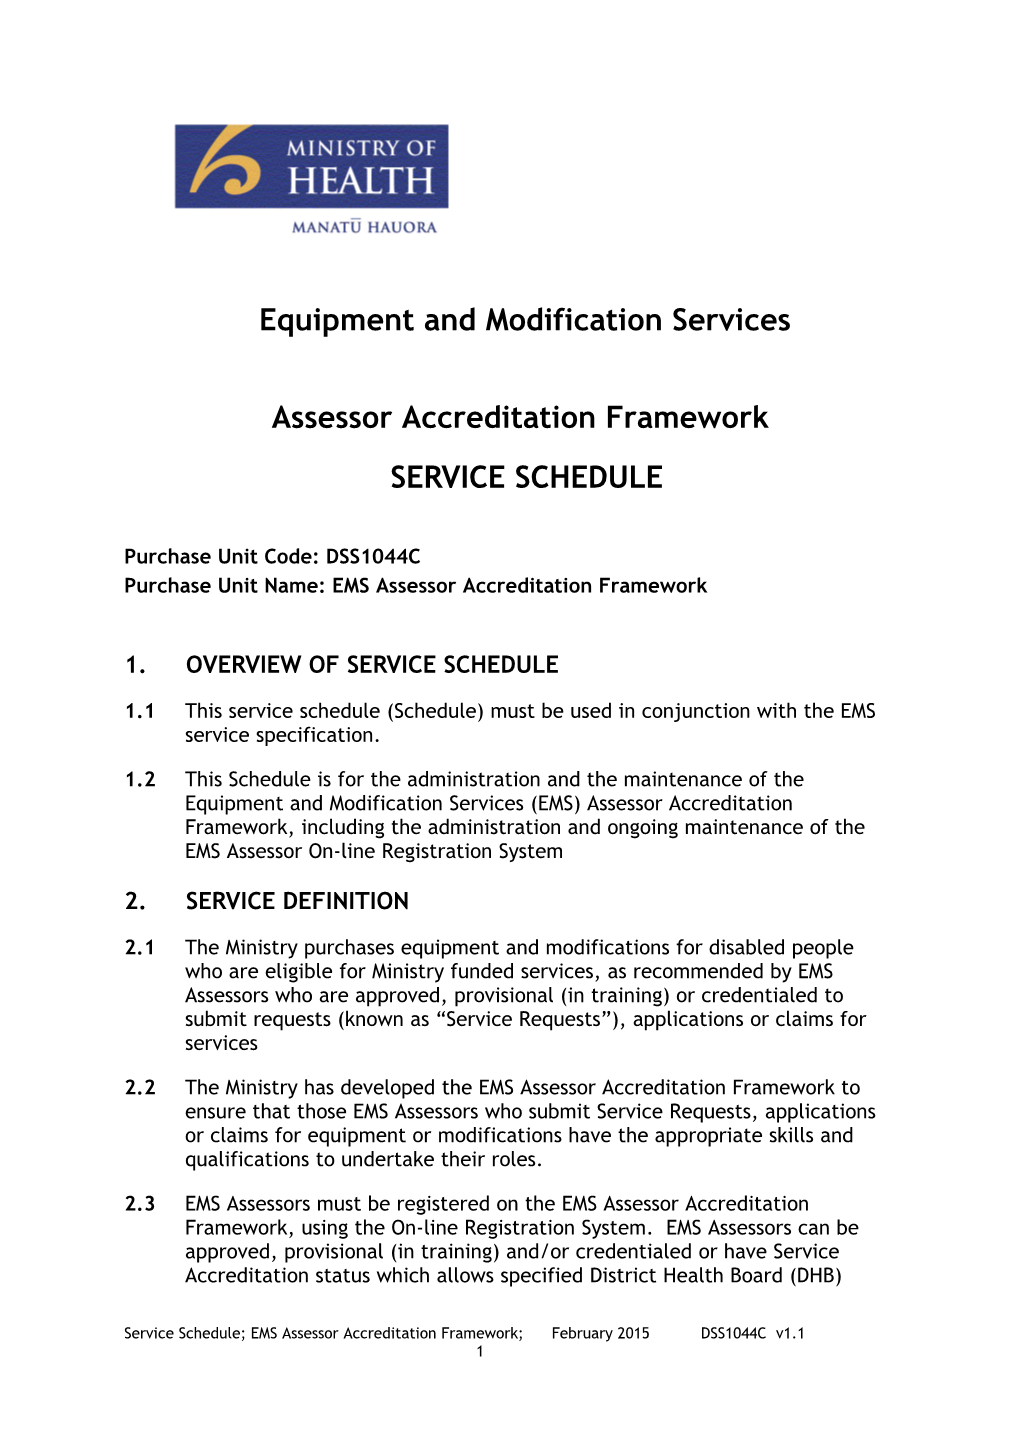 Purchase Unit Name: EMS Assessor Accreditation Framework